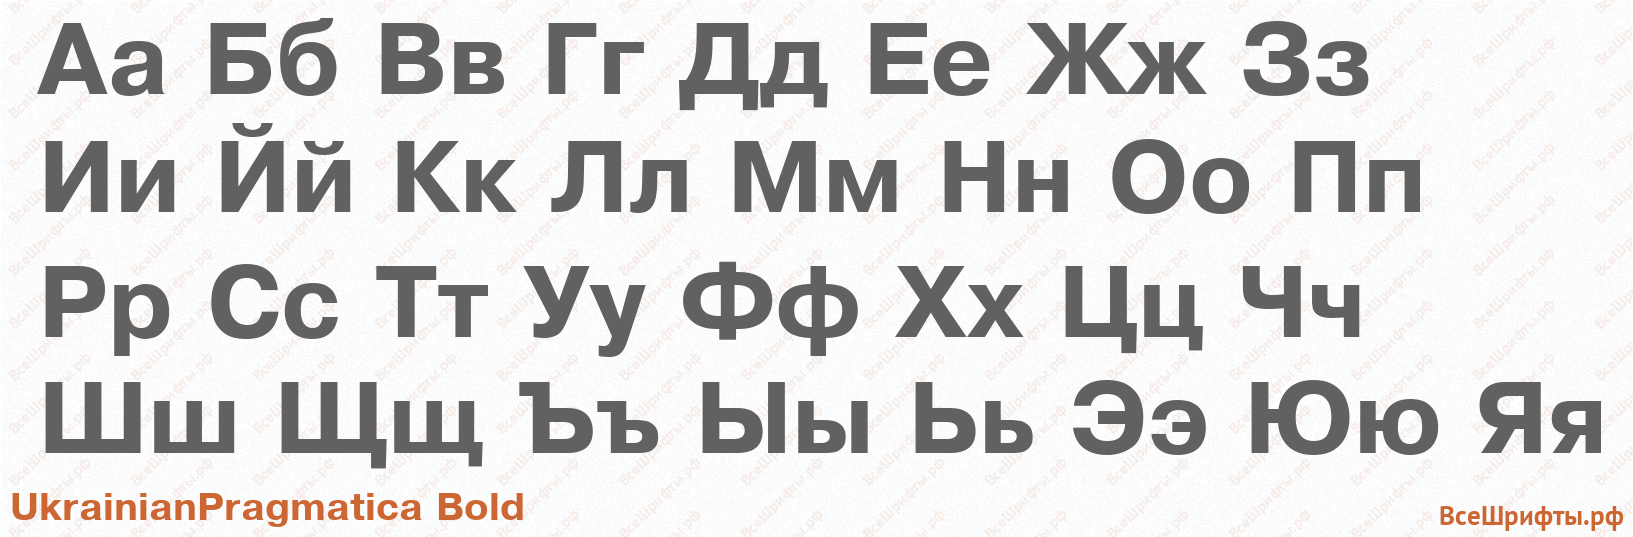 Шрифт UkrainianPragmatica Bold с русскими буквами